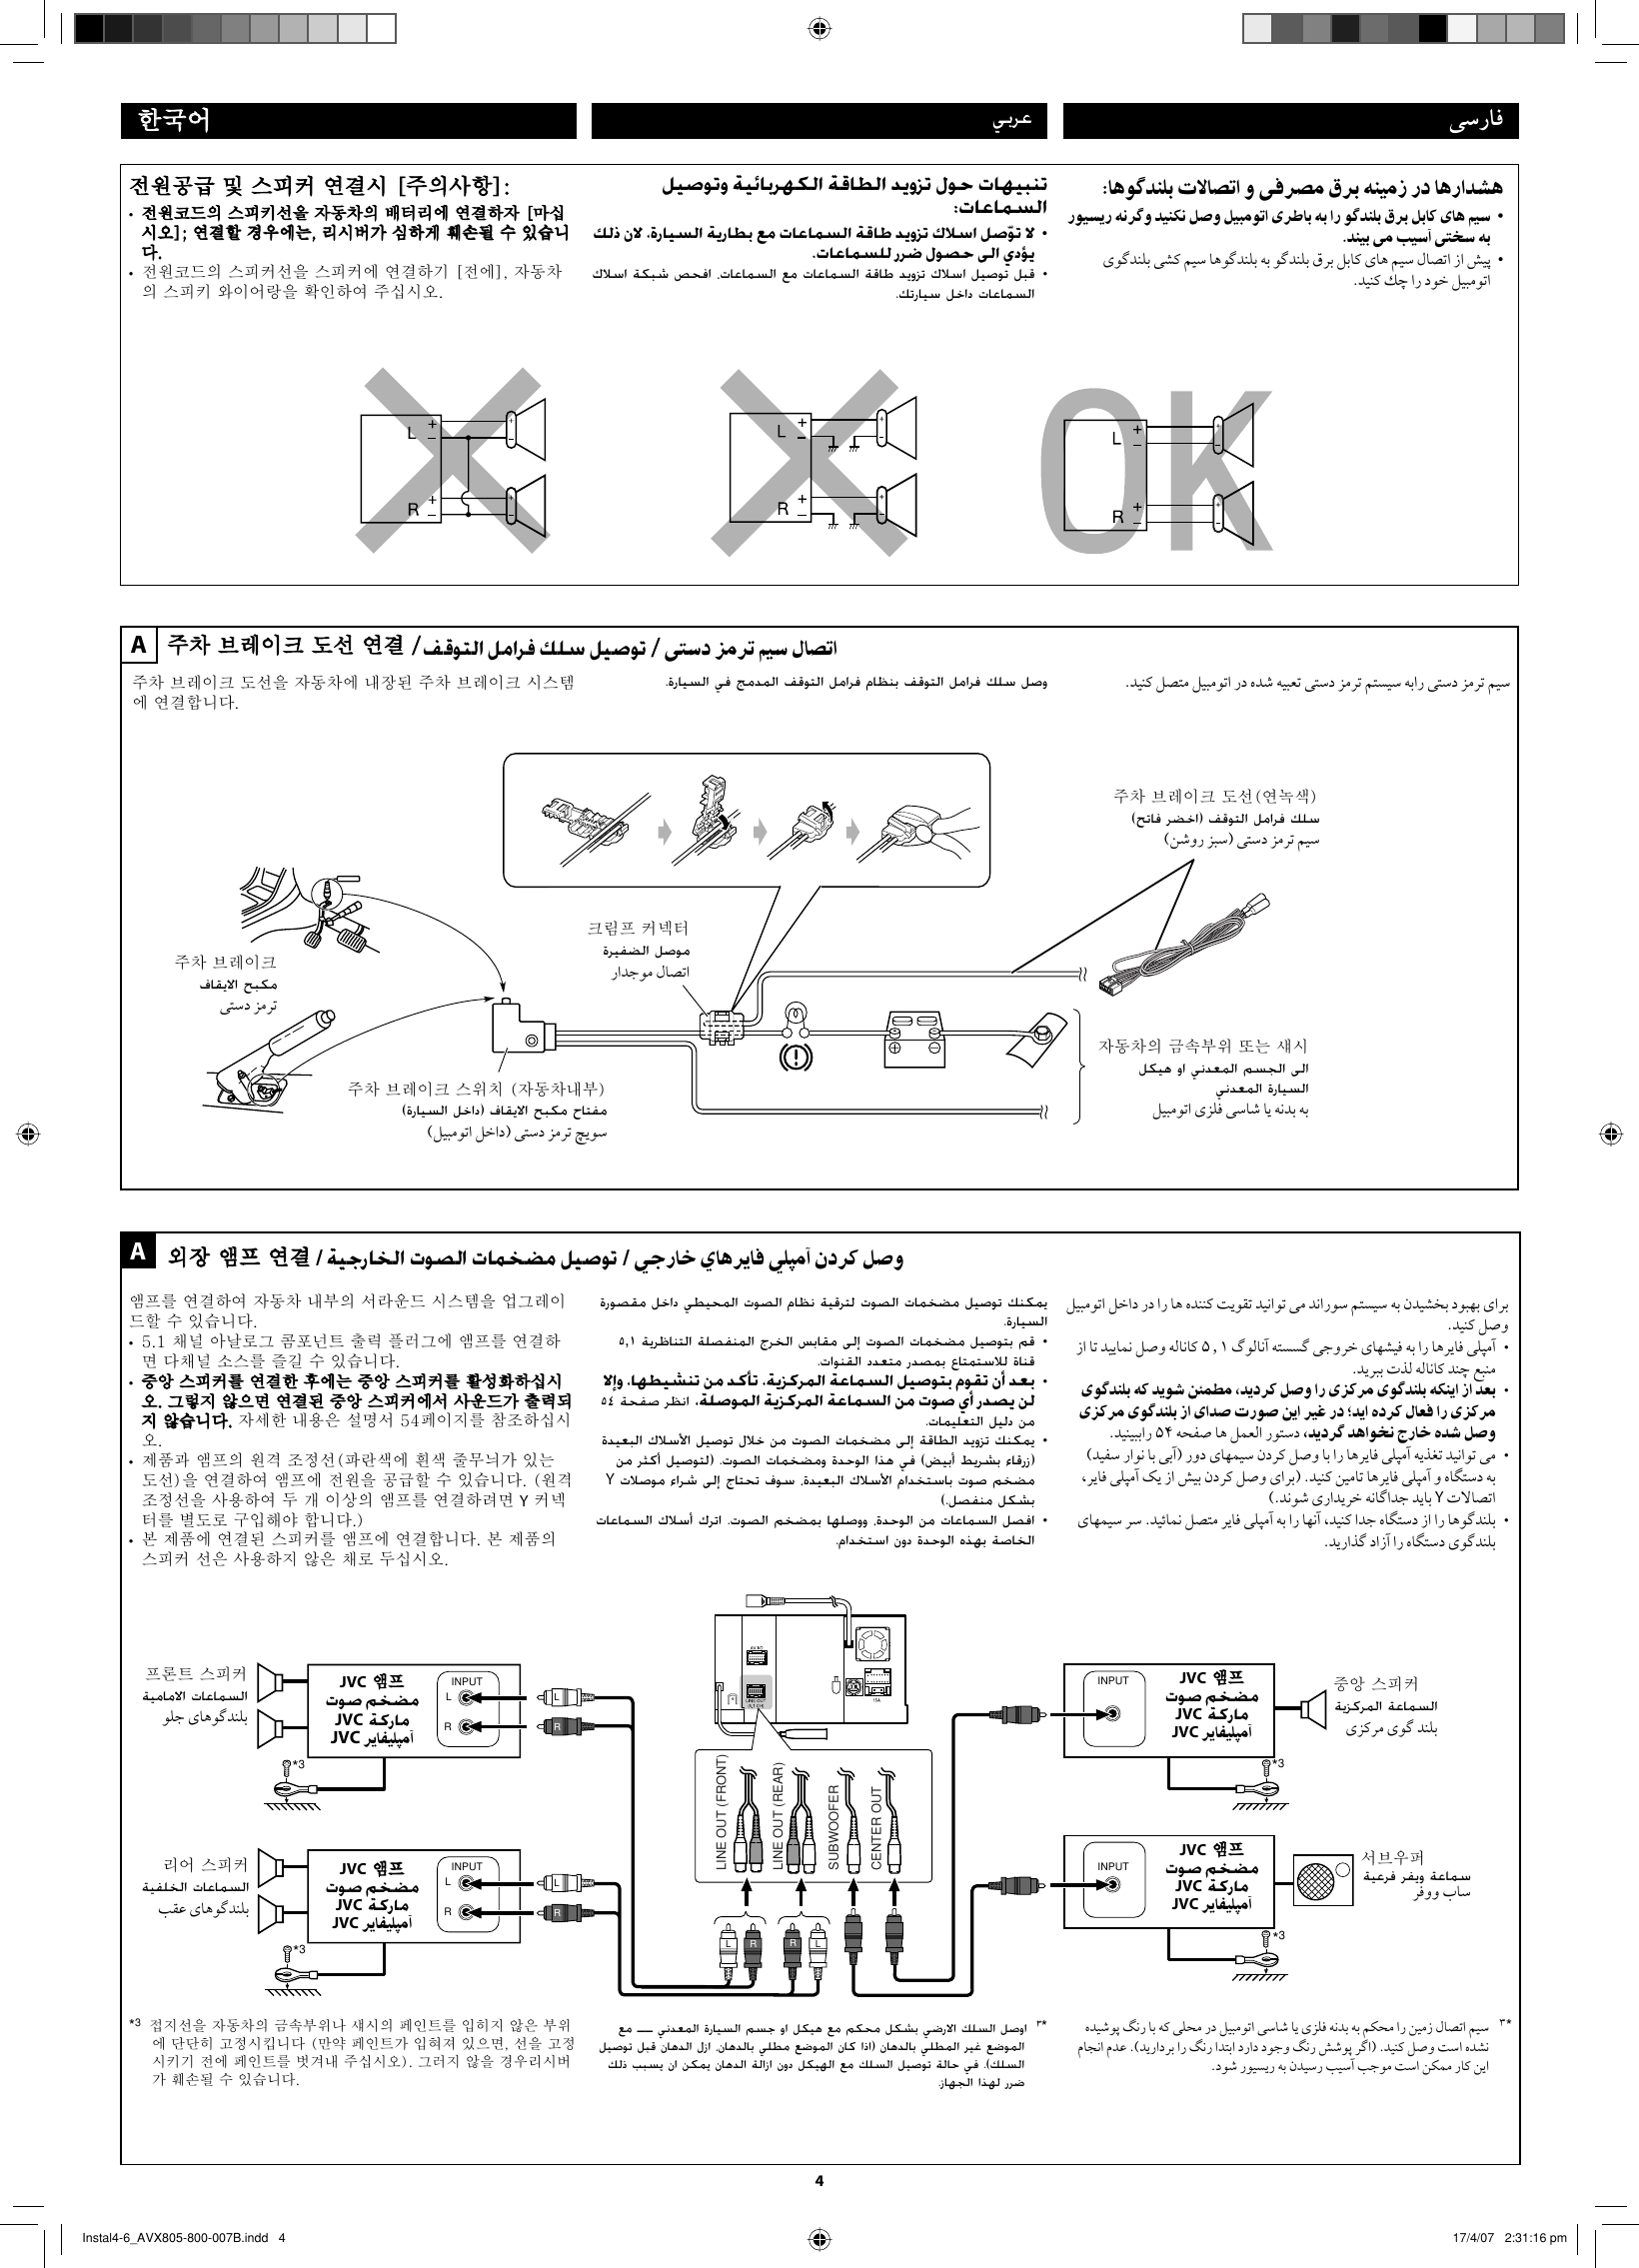 Page 4 of 6 - JVC KW-AVX800U KW-AVX805/KW-AVX800[U] User Manual INSTALLATION (Asia) LVT1667-007B